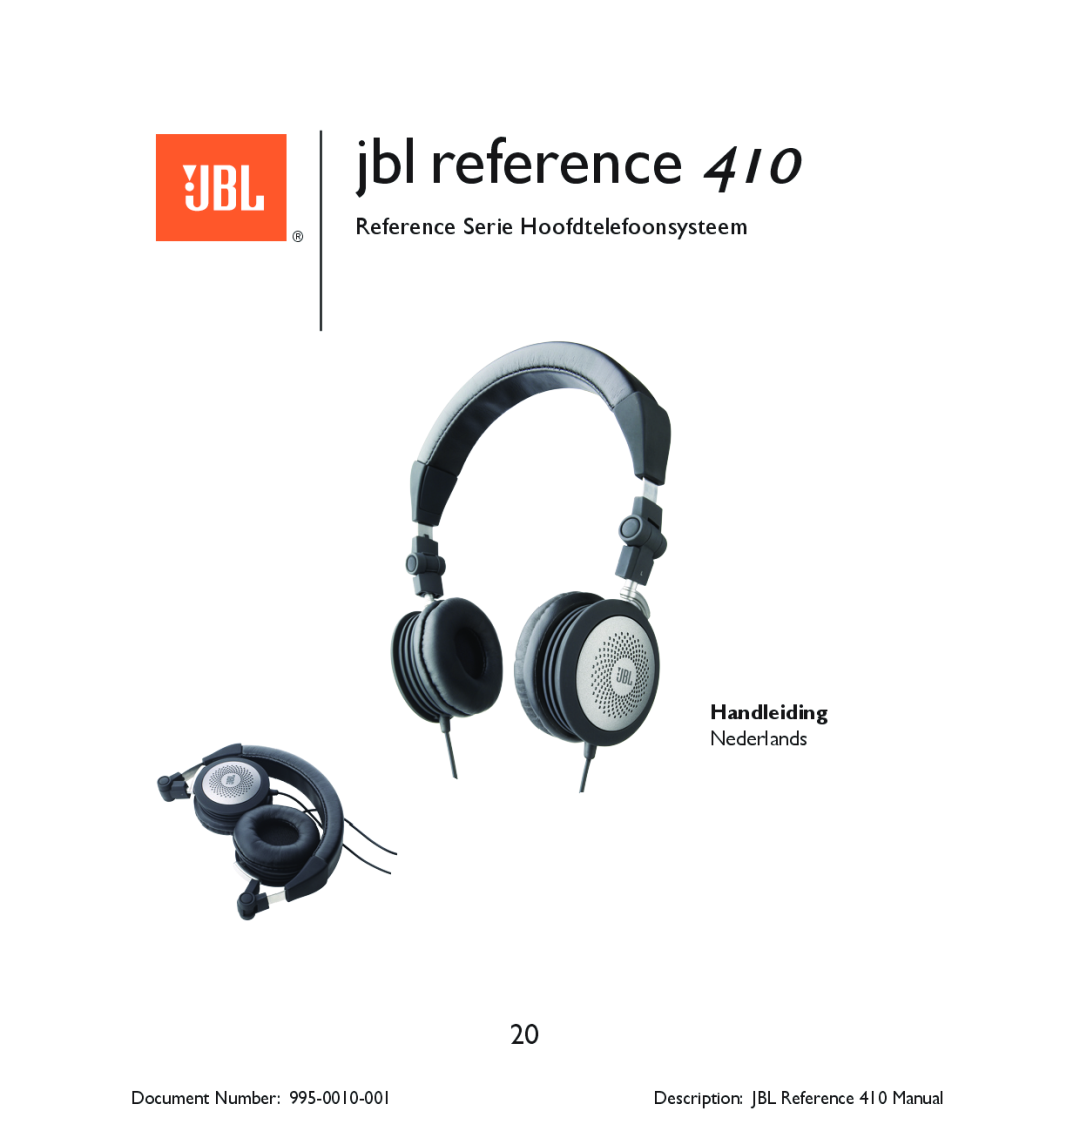 JBL 410 manual Reference Serie Hoofdtelefoonsysteem, Handleiding, jbl reference, Document Number 